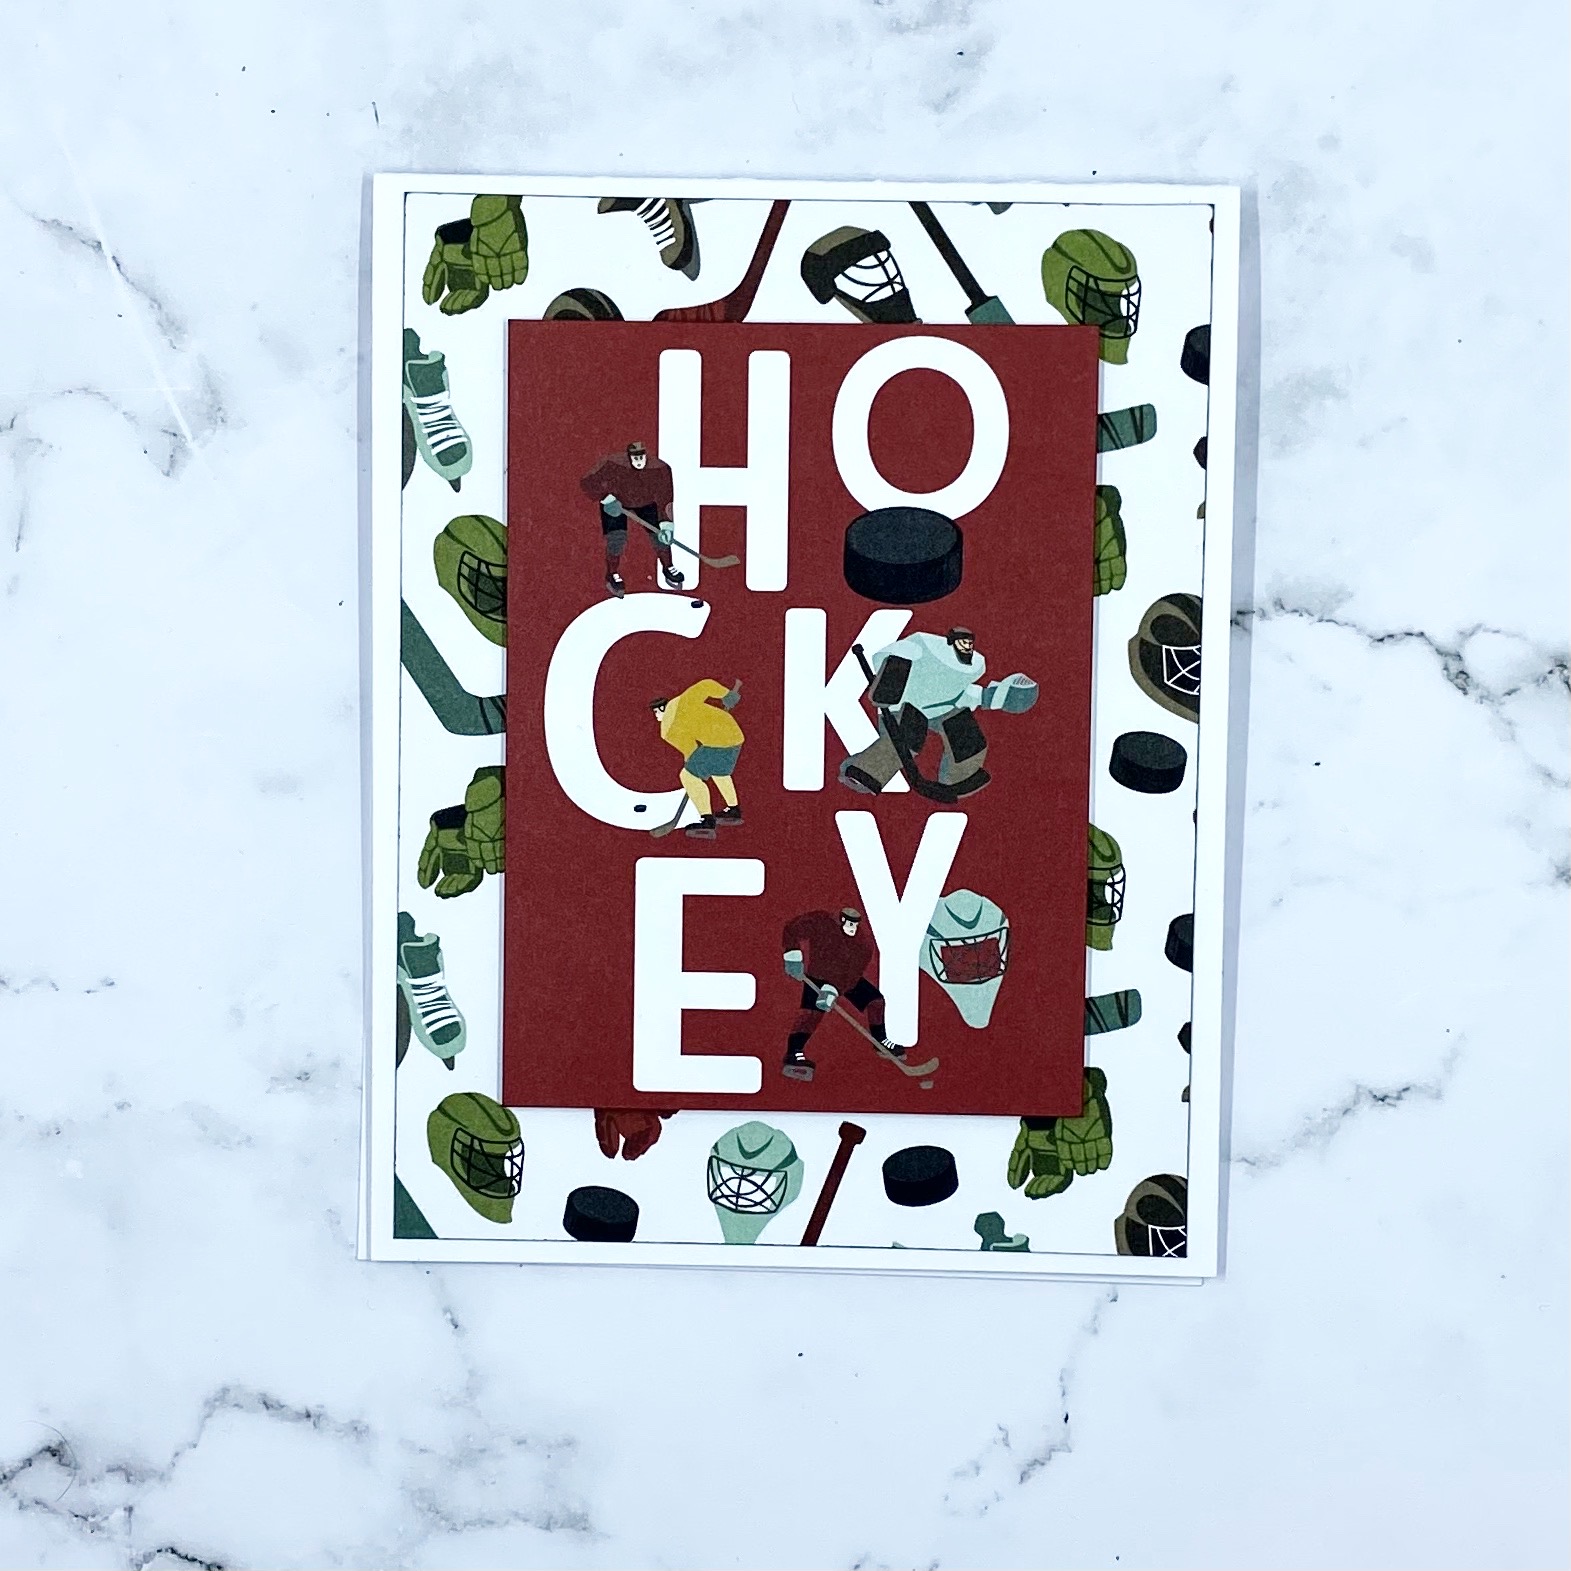 photoplay - hockey card - cheap cards - card making -Nicki hearts cards